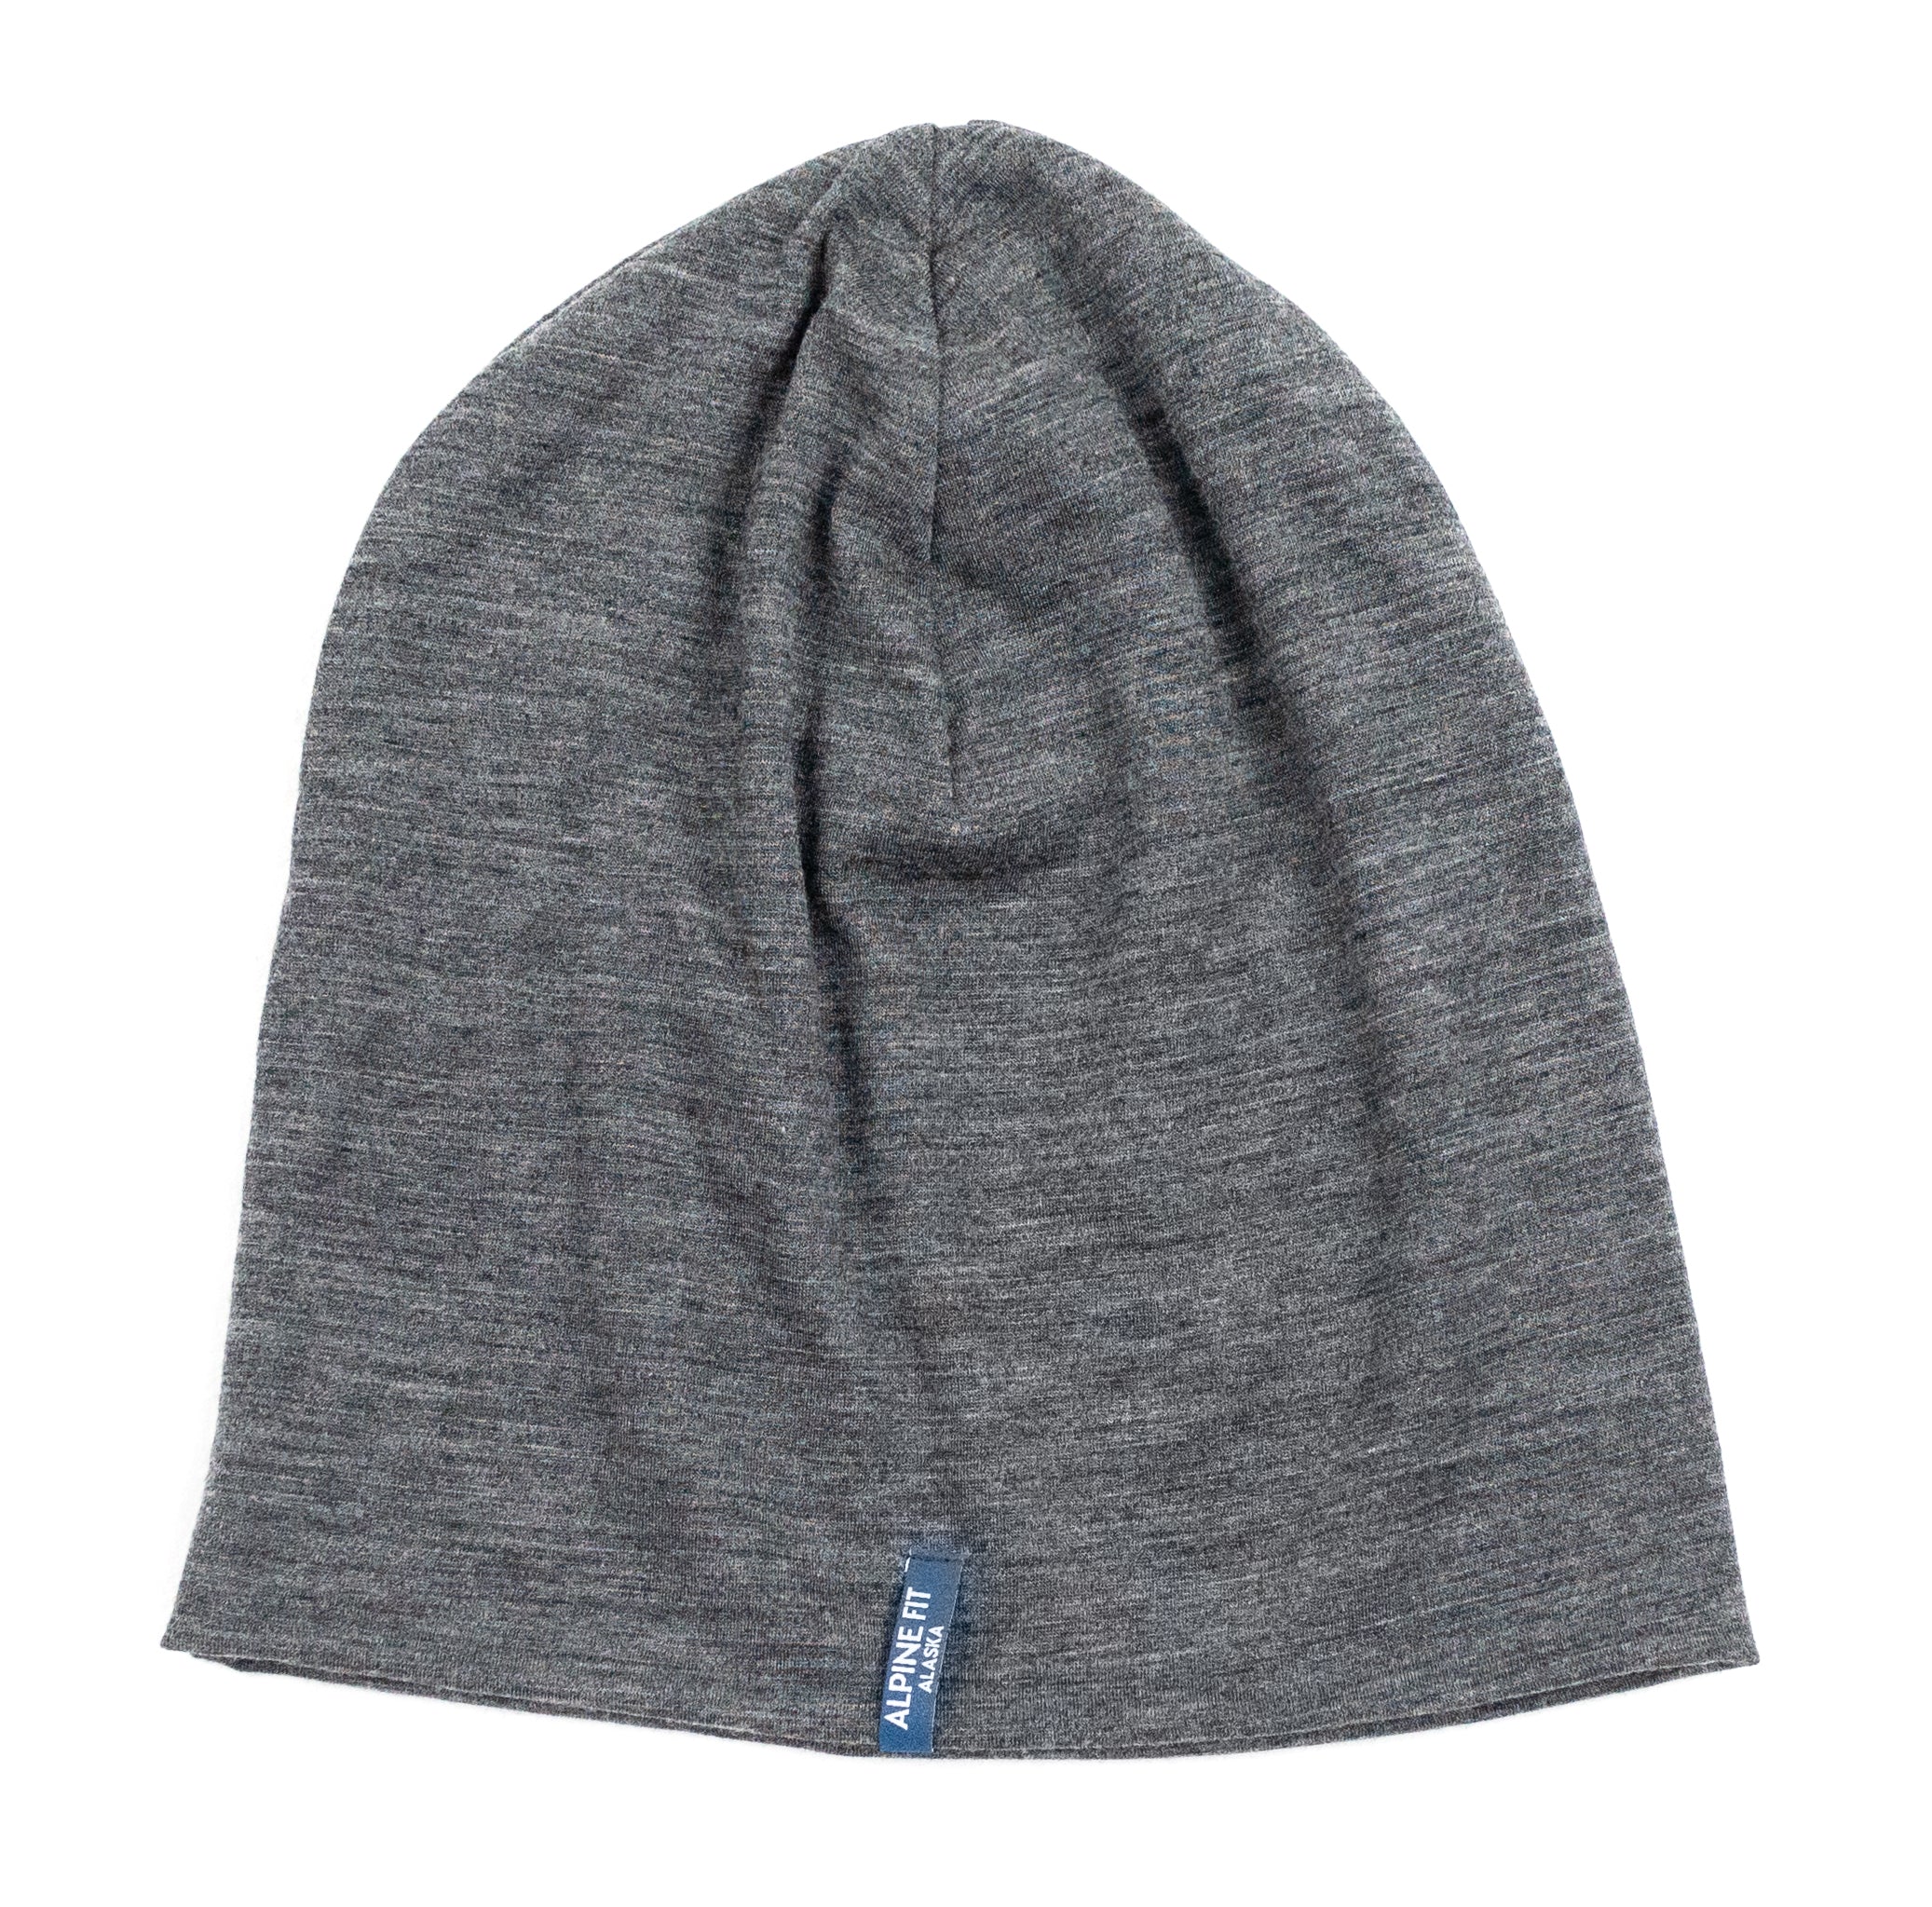 alpine fit merino wool hat charcoal gray flat lay